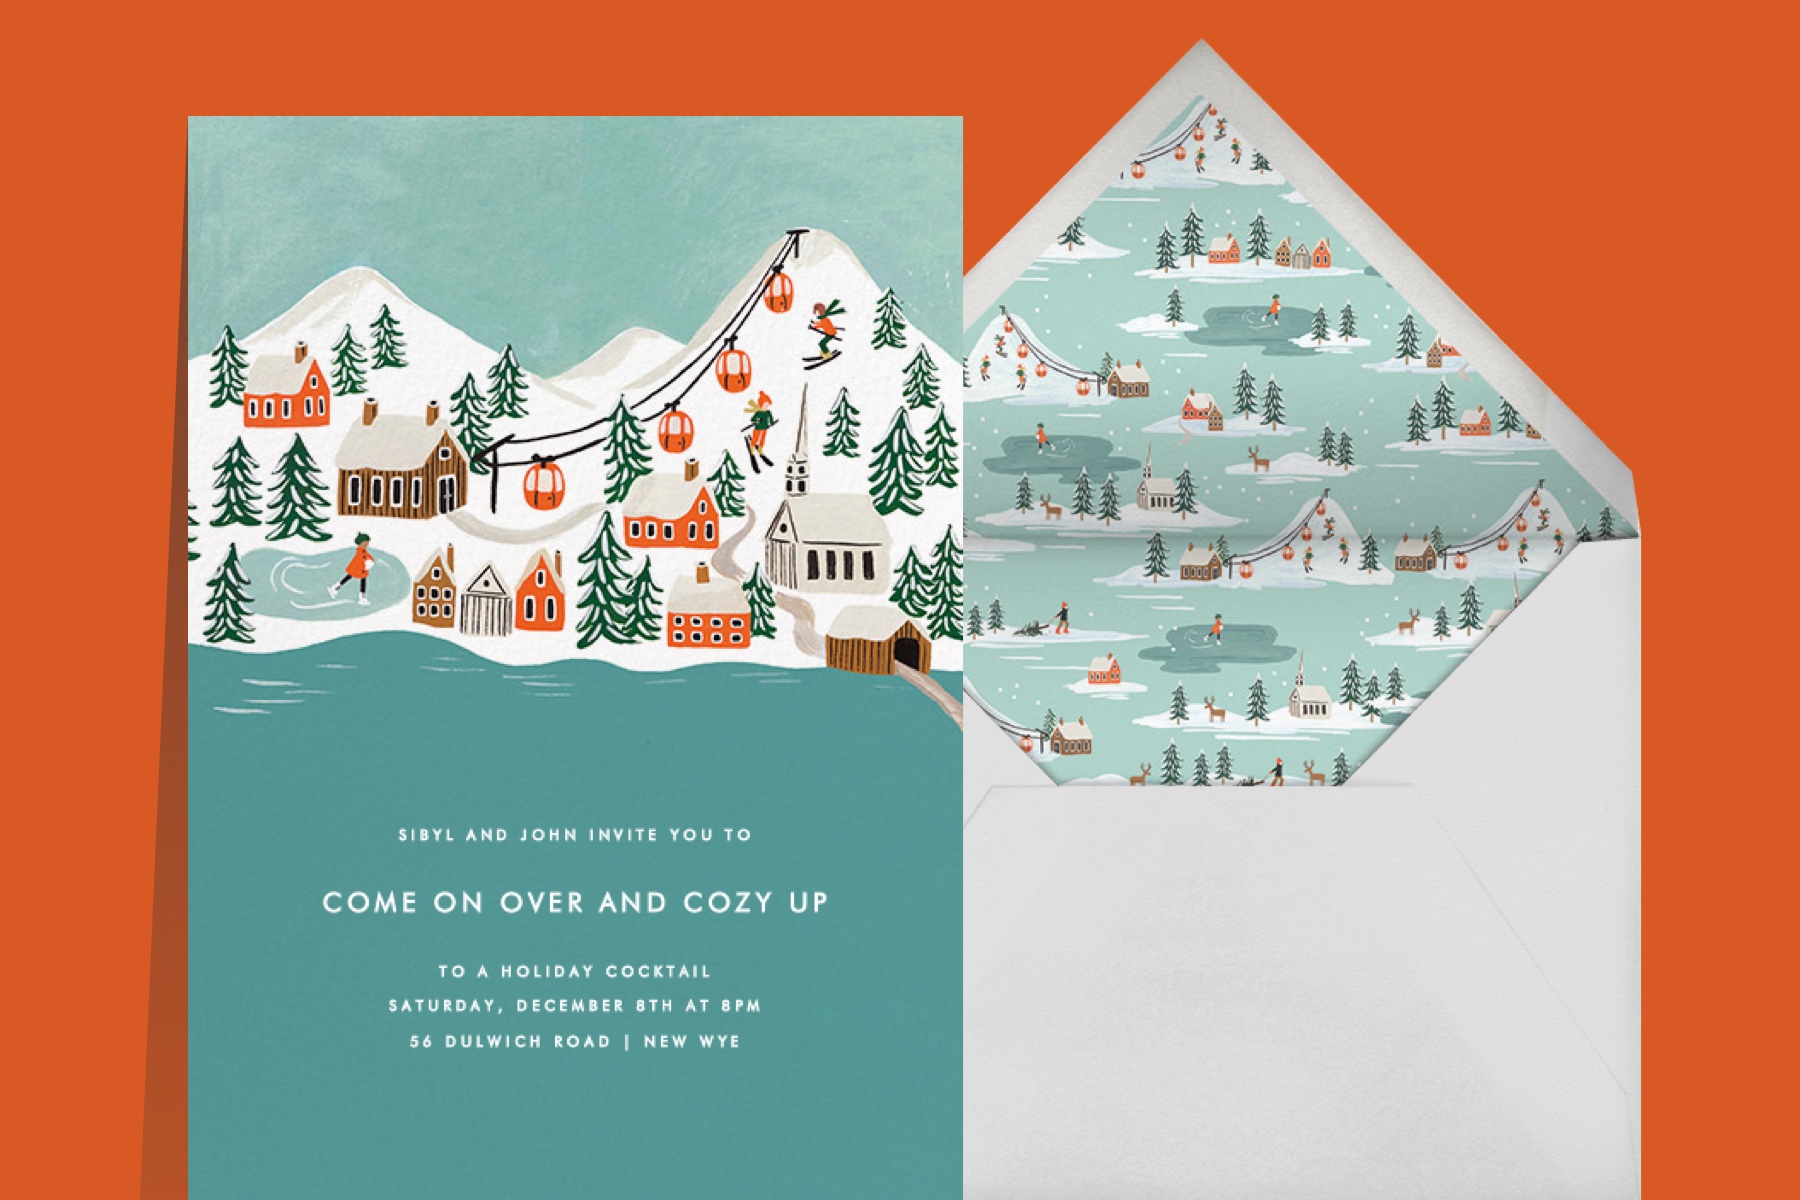 An invitation for a winter gathering shows a snowy ski village scene. 